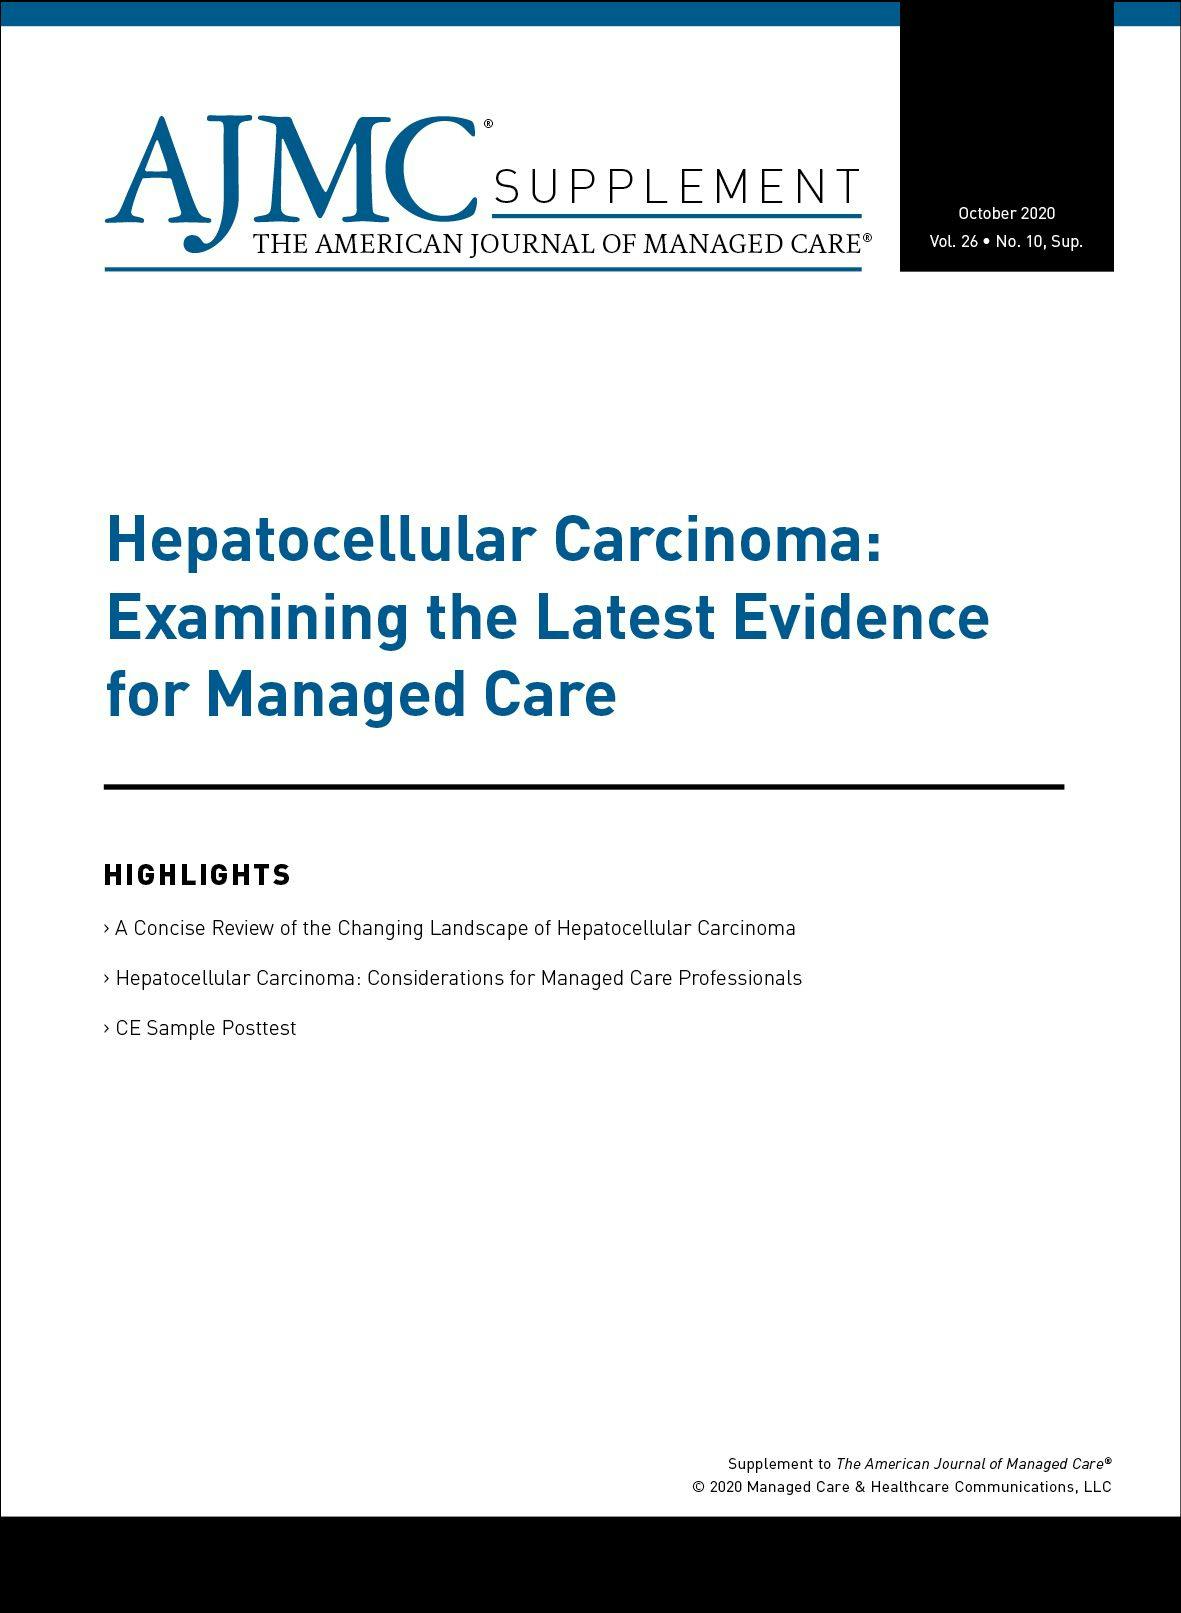 Hepatocellular Carcinoma: Examining the Latest Evidence for Managed Care